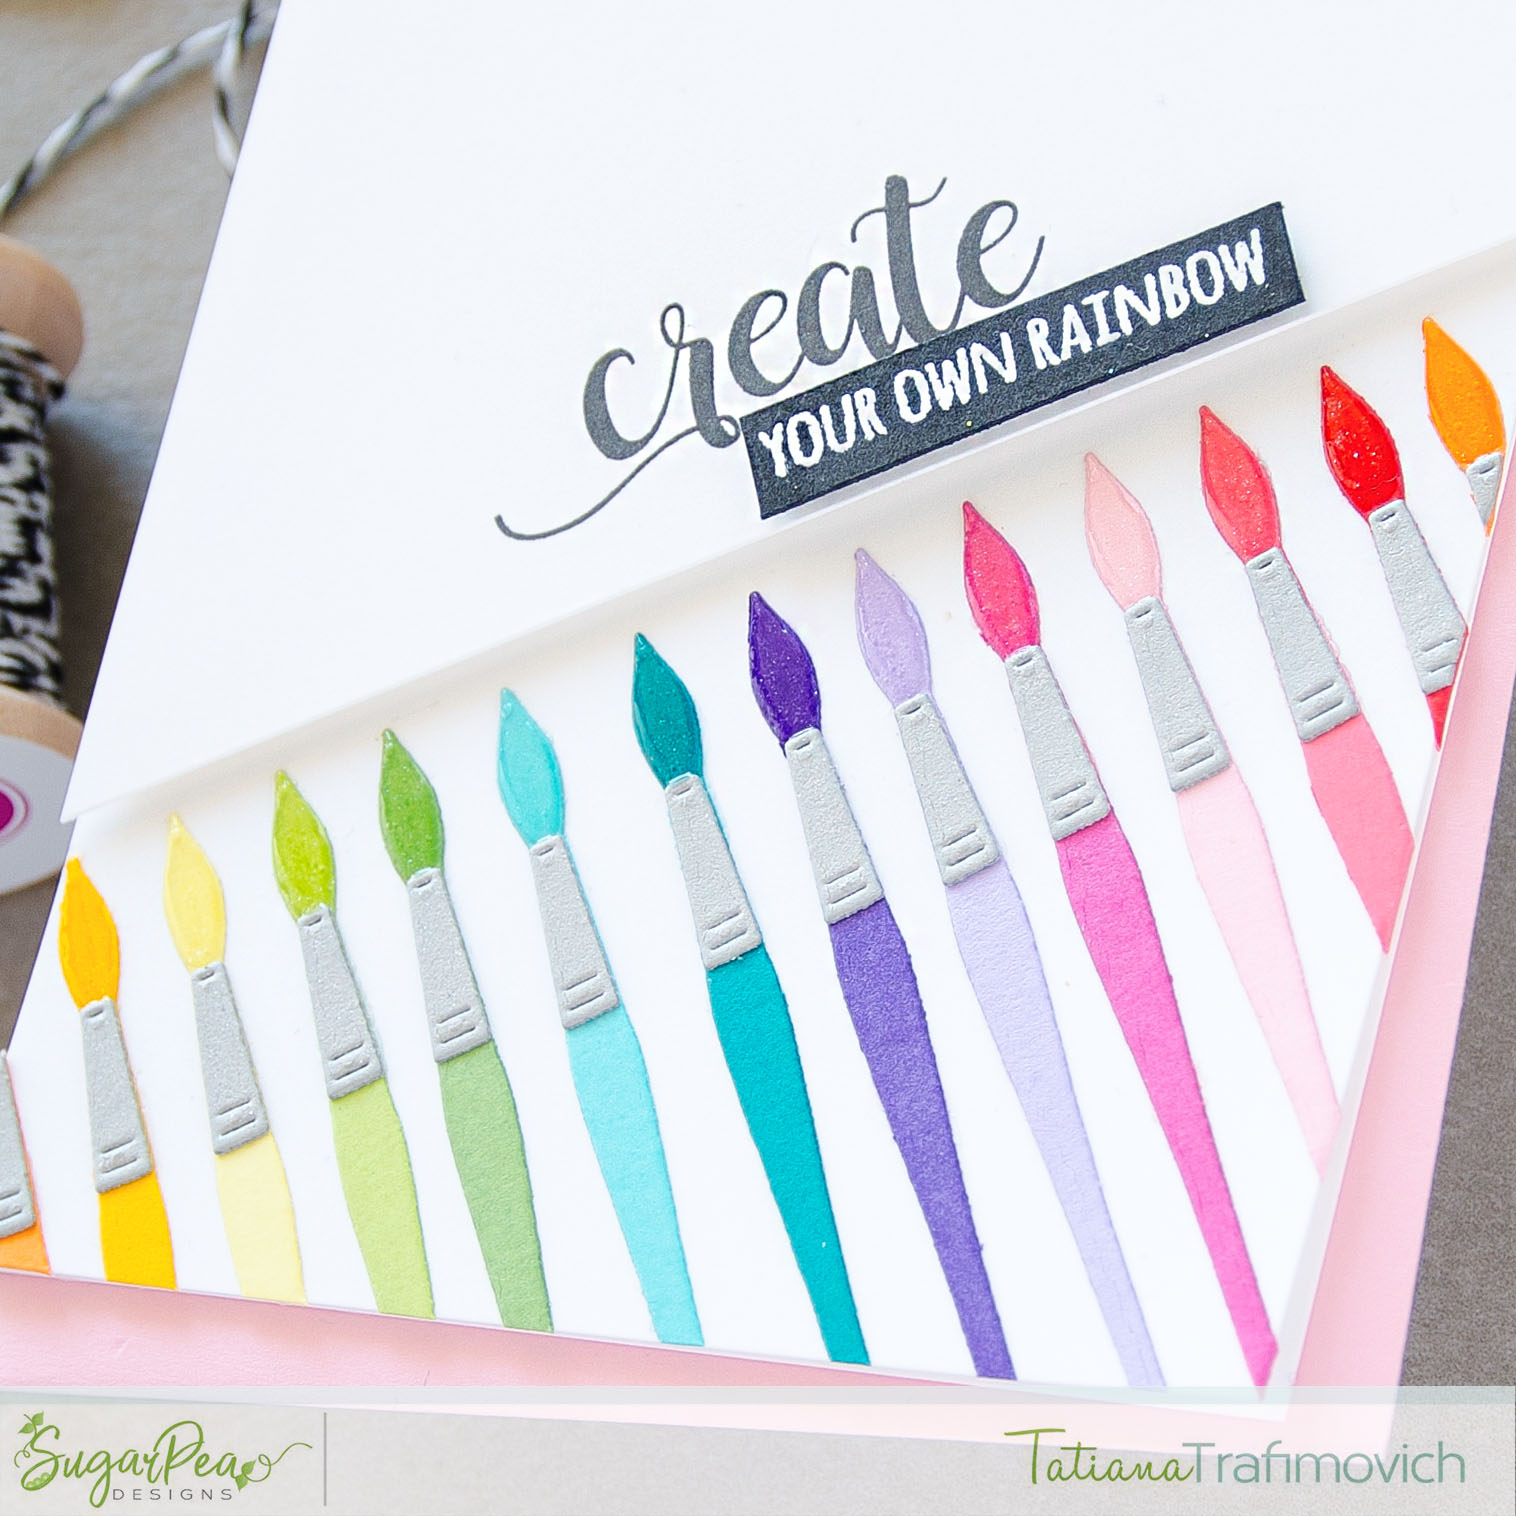 Create Your Own Rainbow #handmade card by Tatiana Trafimovich #tatianacraftandart - Paint Palette Die by SugarPea Designs #sugarpeadesigns